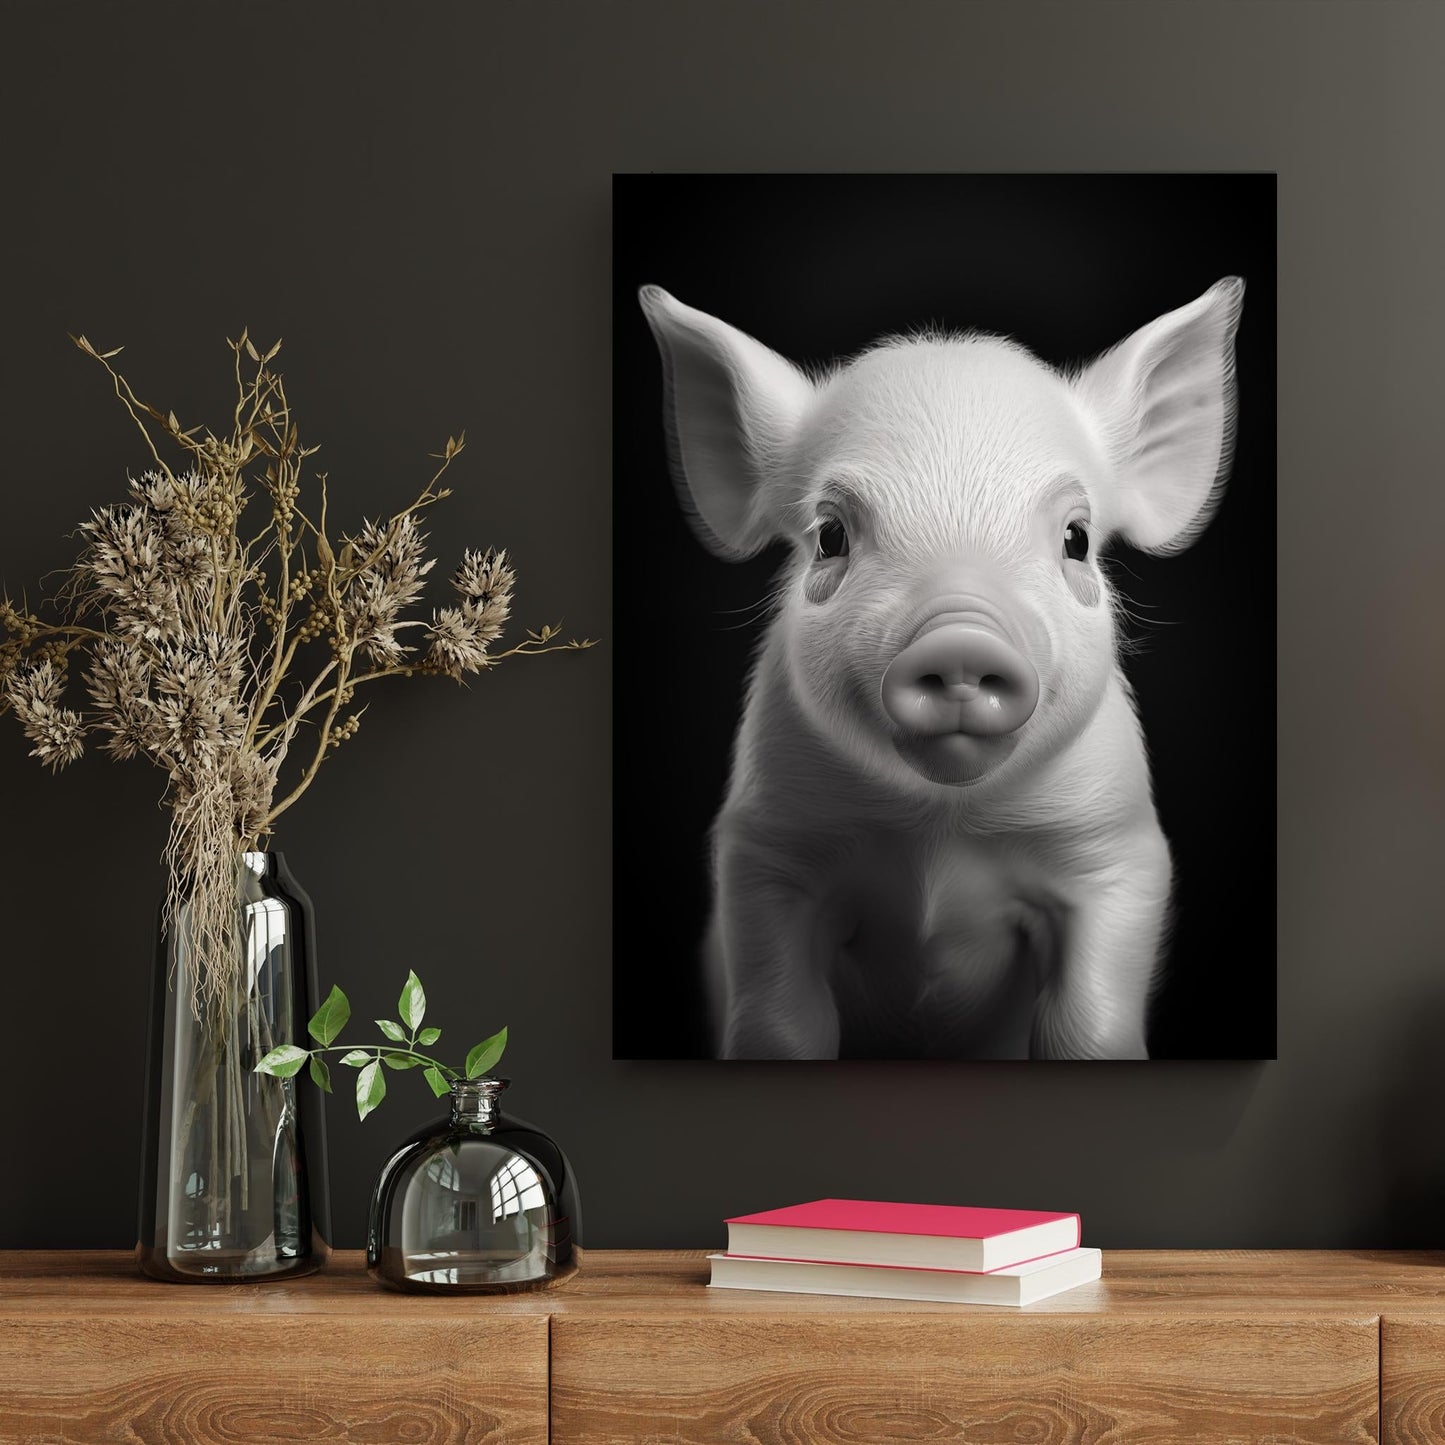 Piglet Portrait - Atka Inspirations